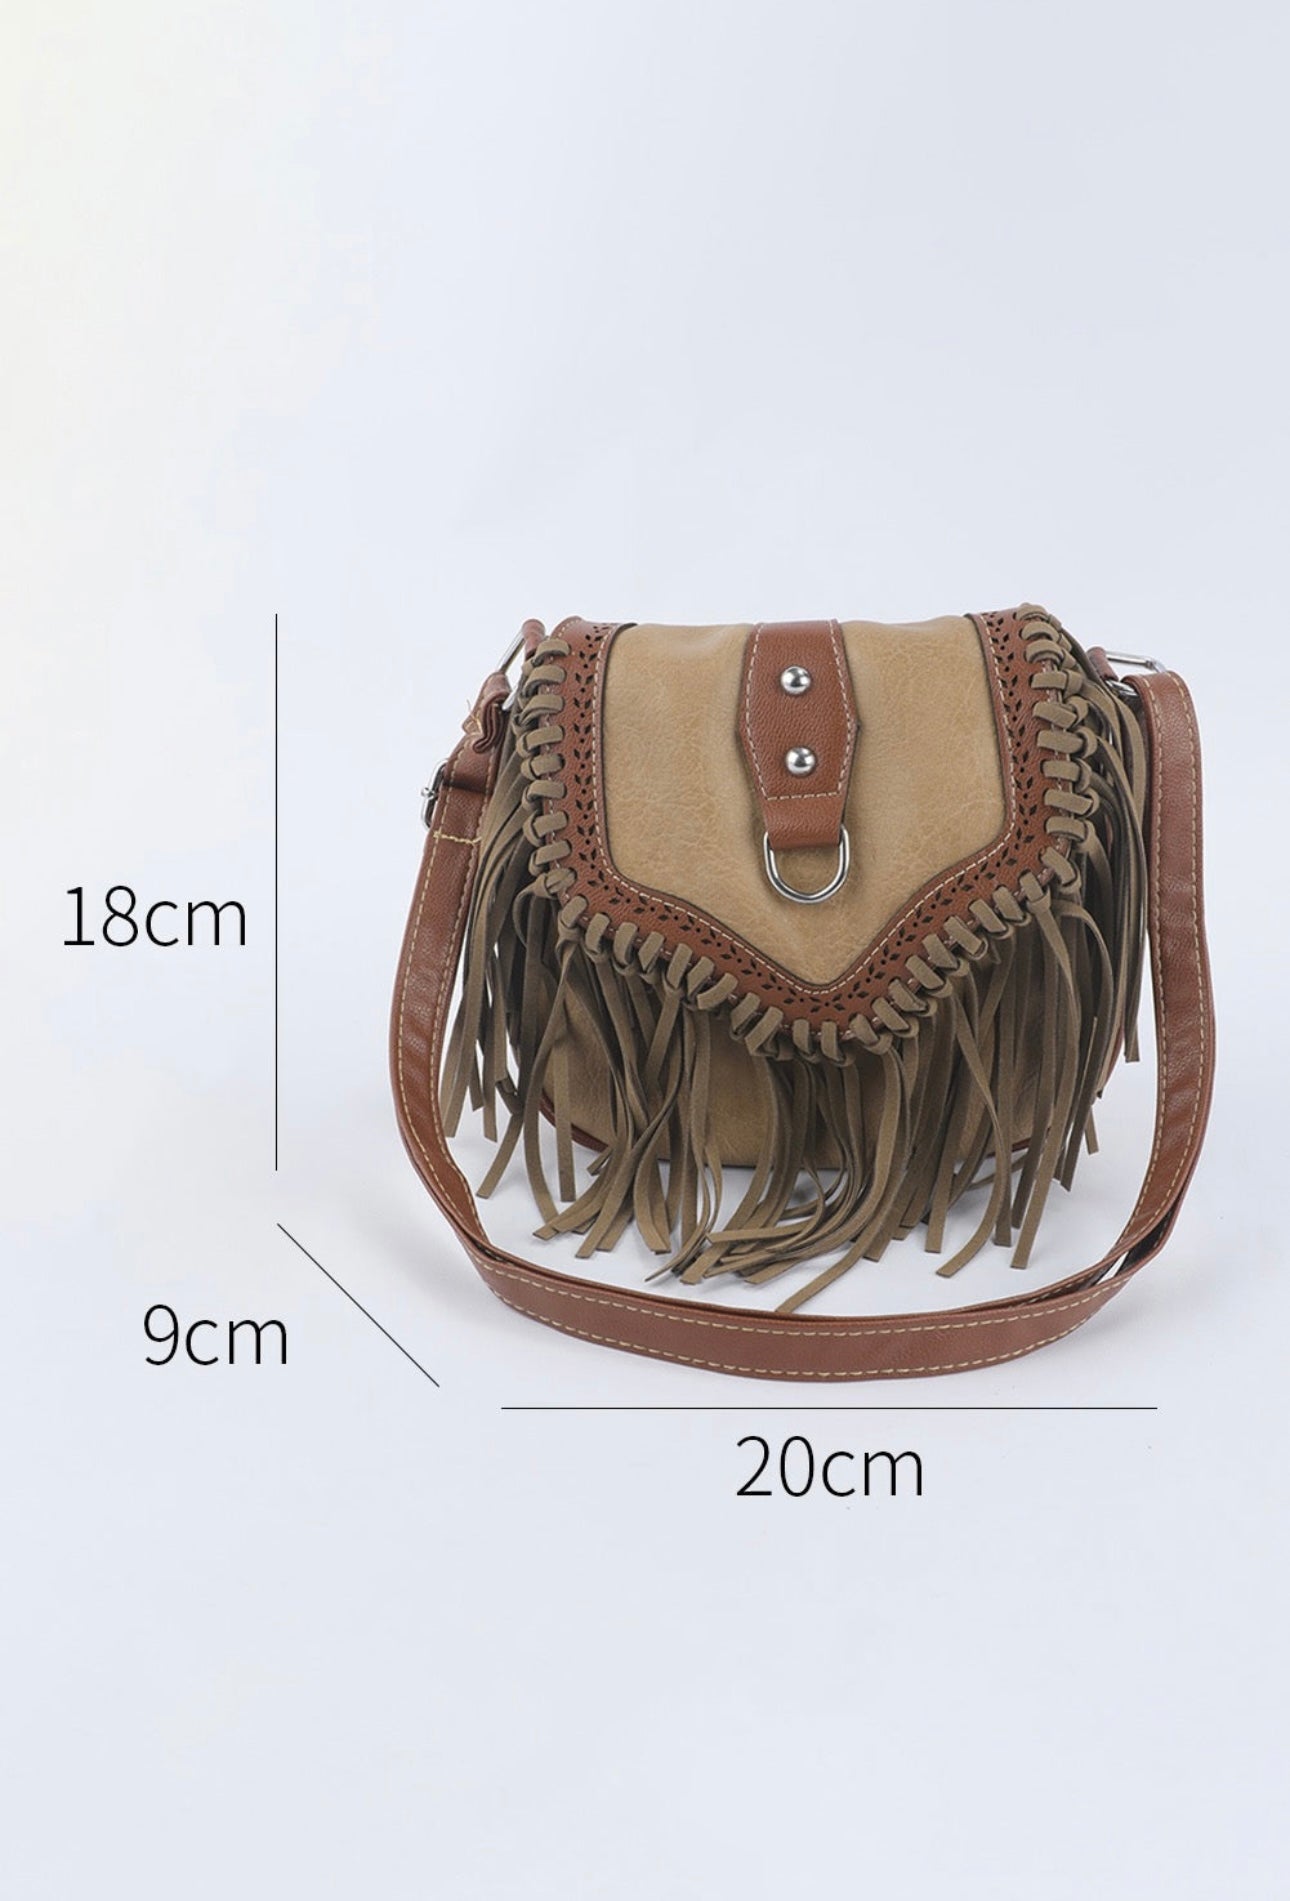 Women's Leather Fringe Crossbody Bag tassel Shoulder Bag 